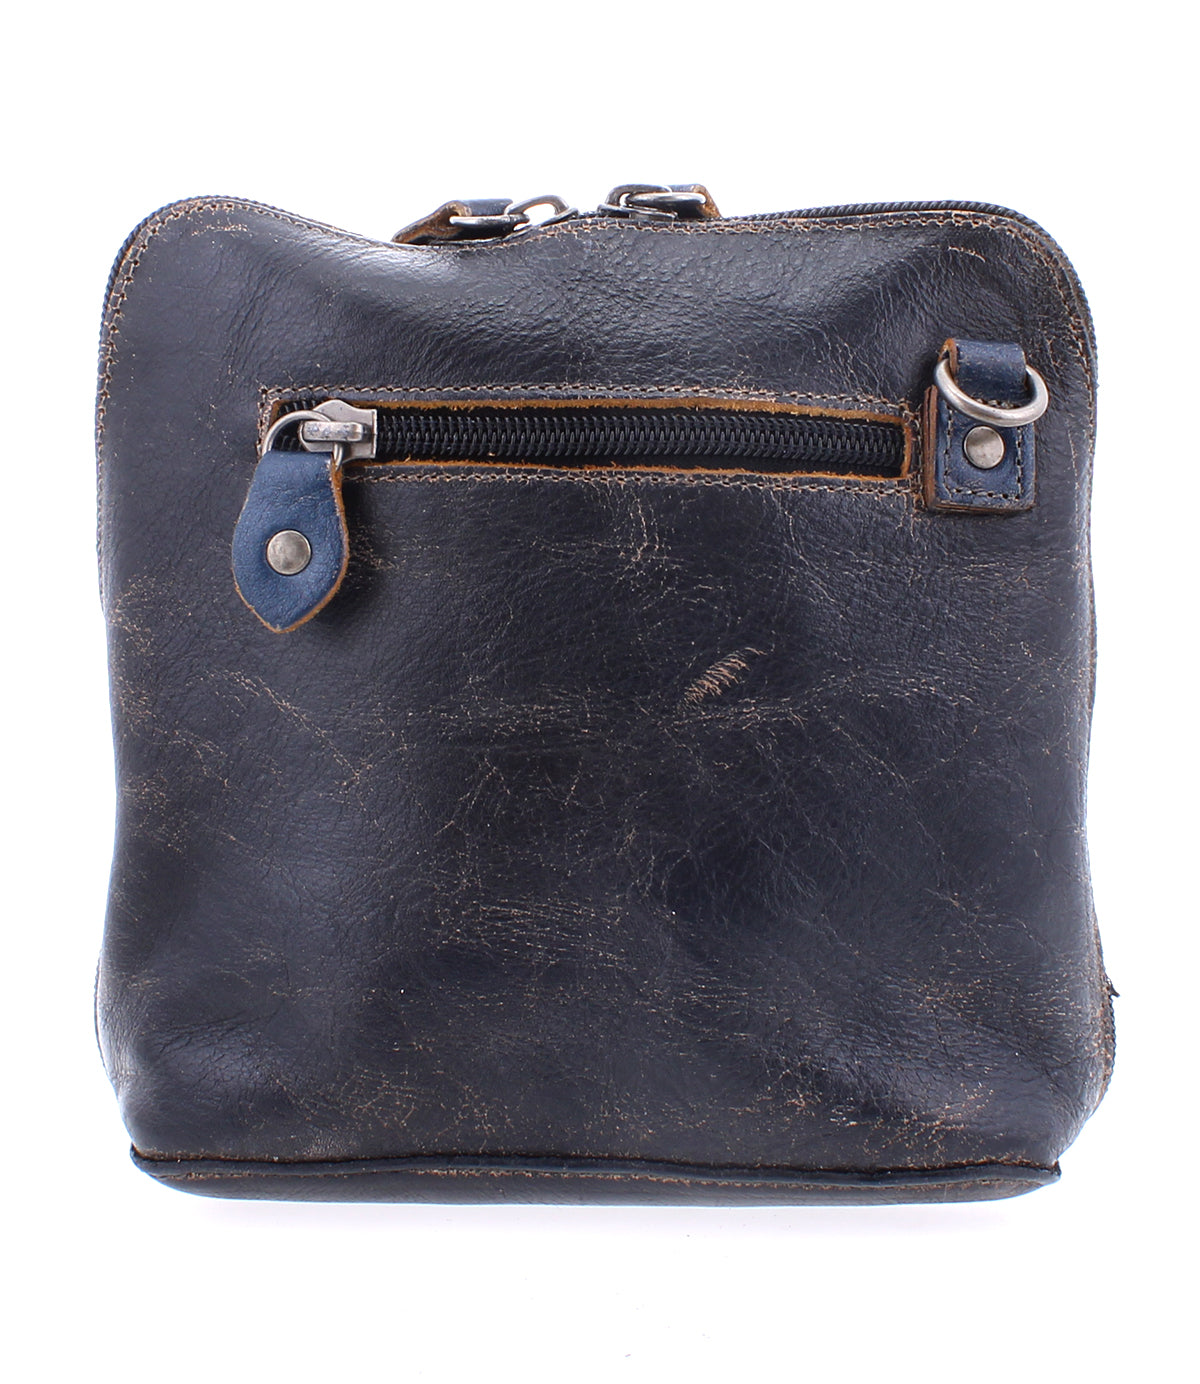 A Bed Stu black leather cross body bag with a zipper.